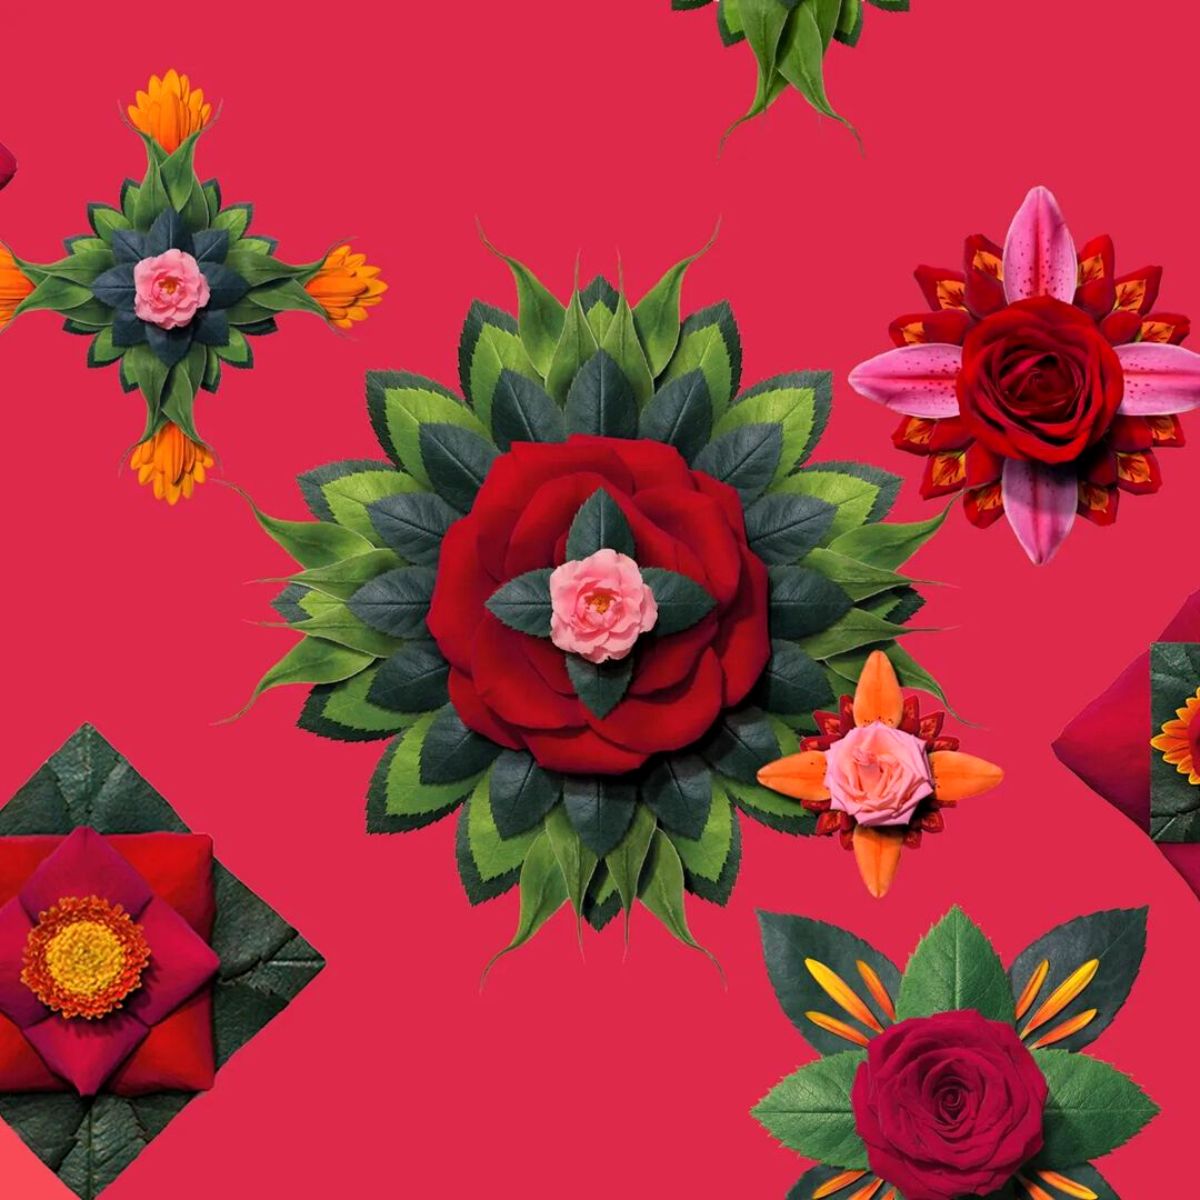 raku inoue crafts iconic fashion brand patterns from bright flower  arrangements